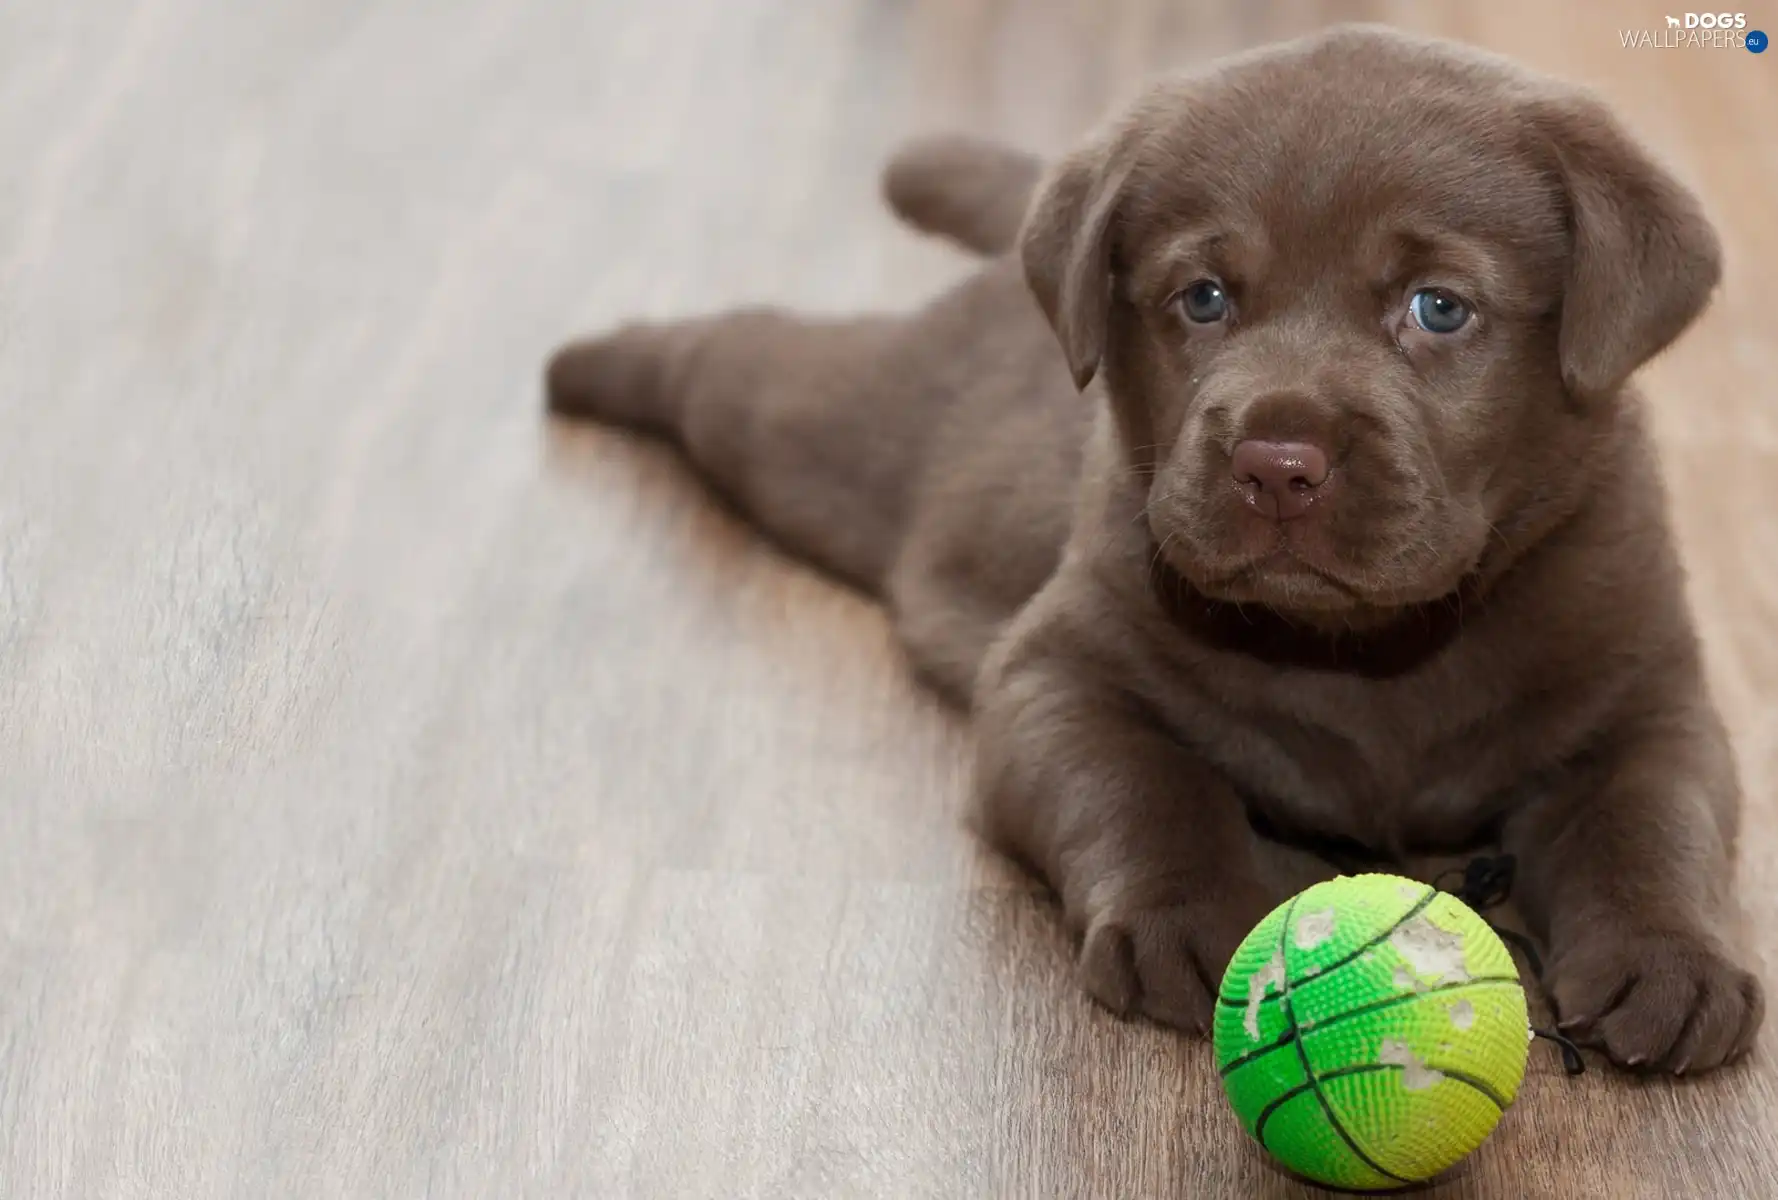 sweet, Puppy, dog, Ball